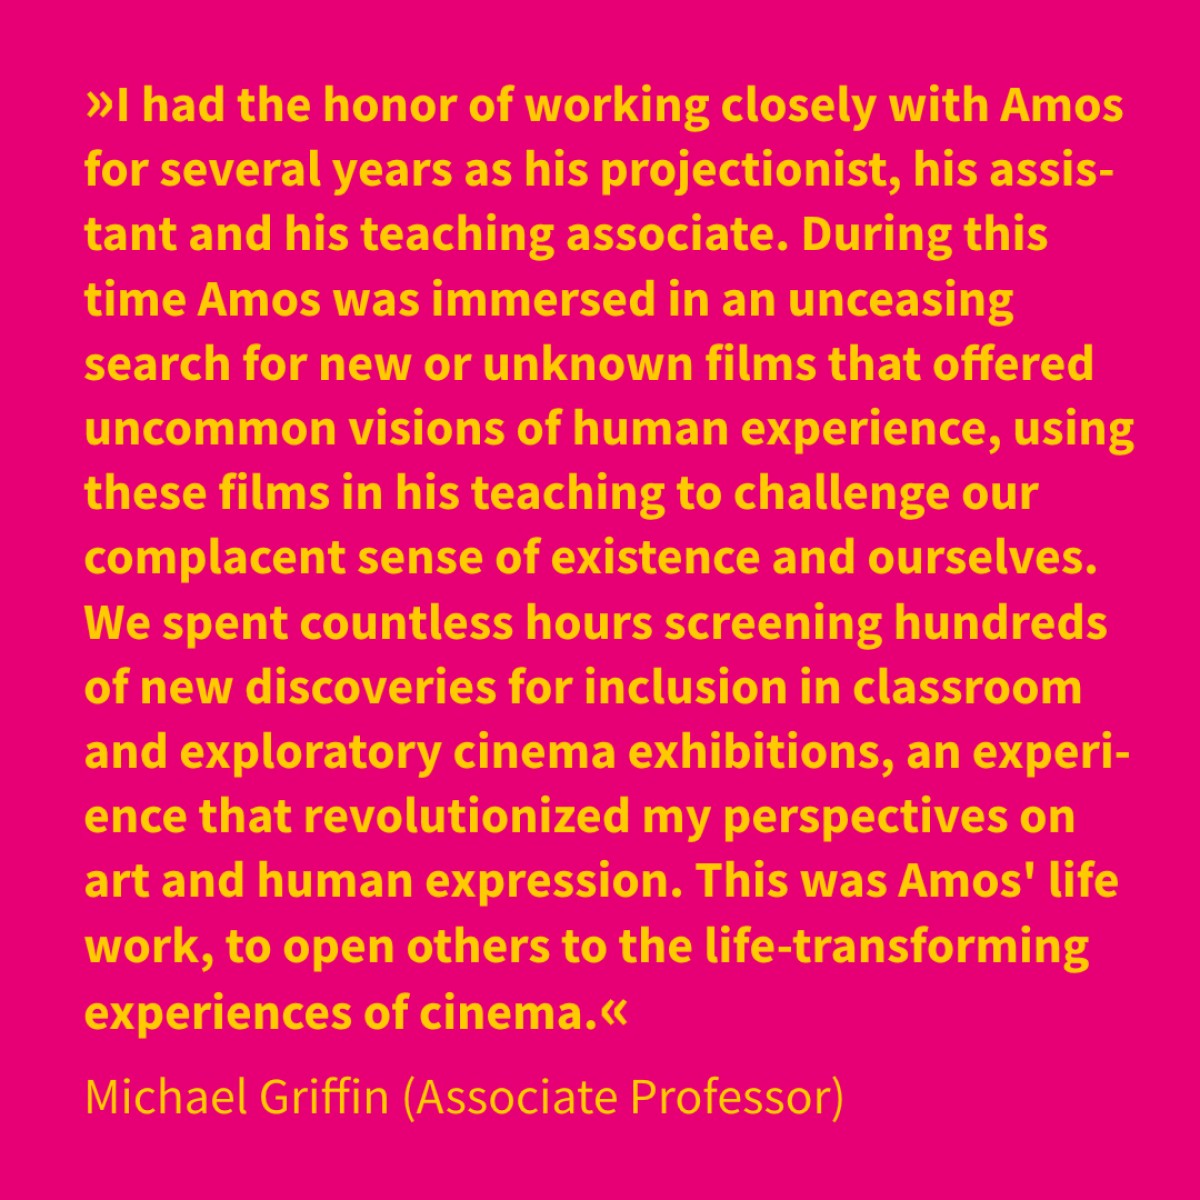 Michael Griffin (Associate Professor)